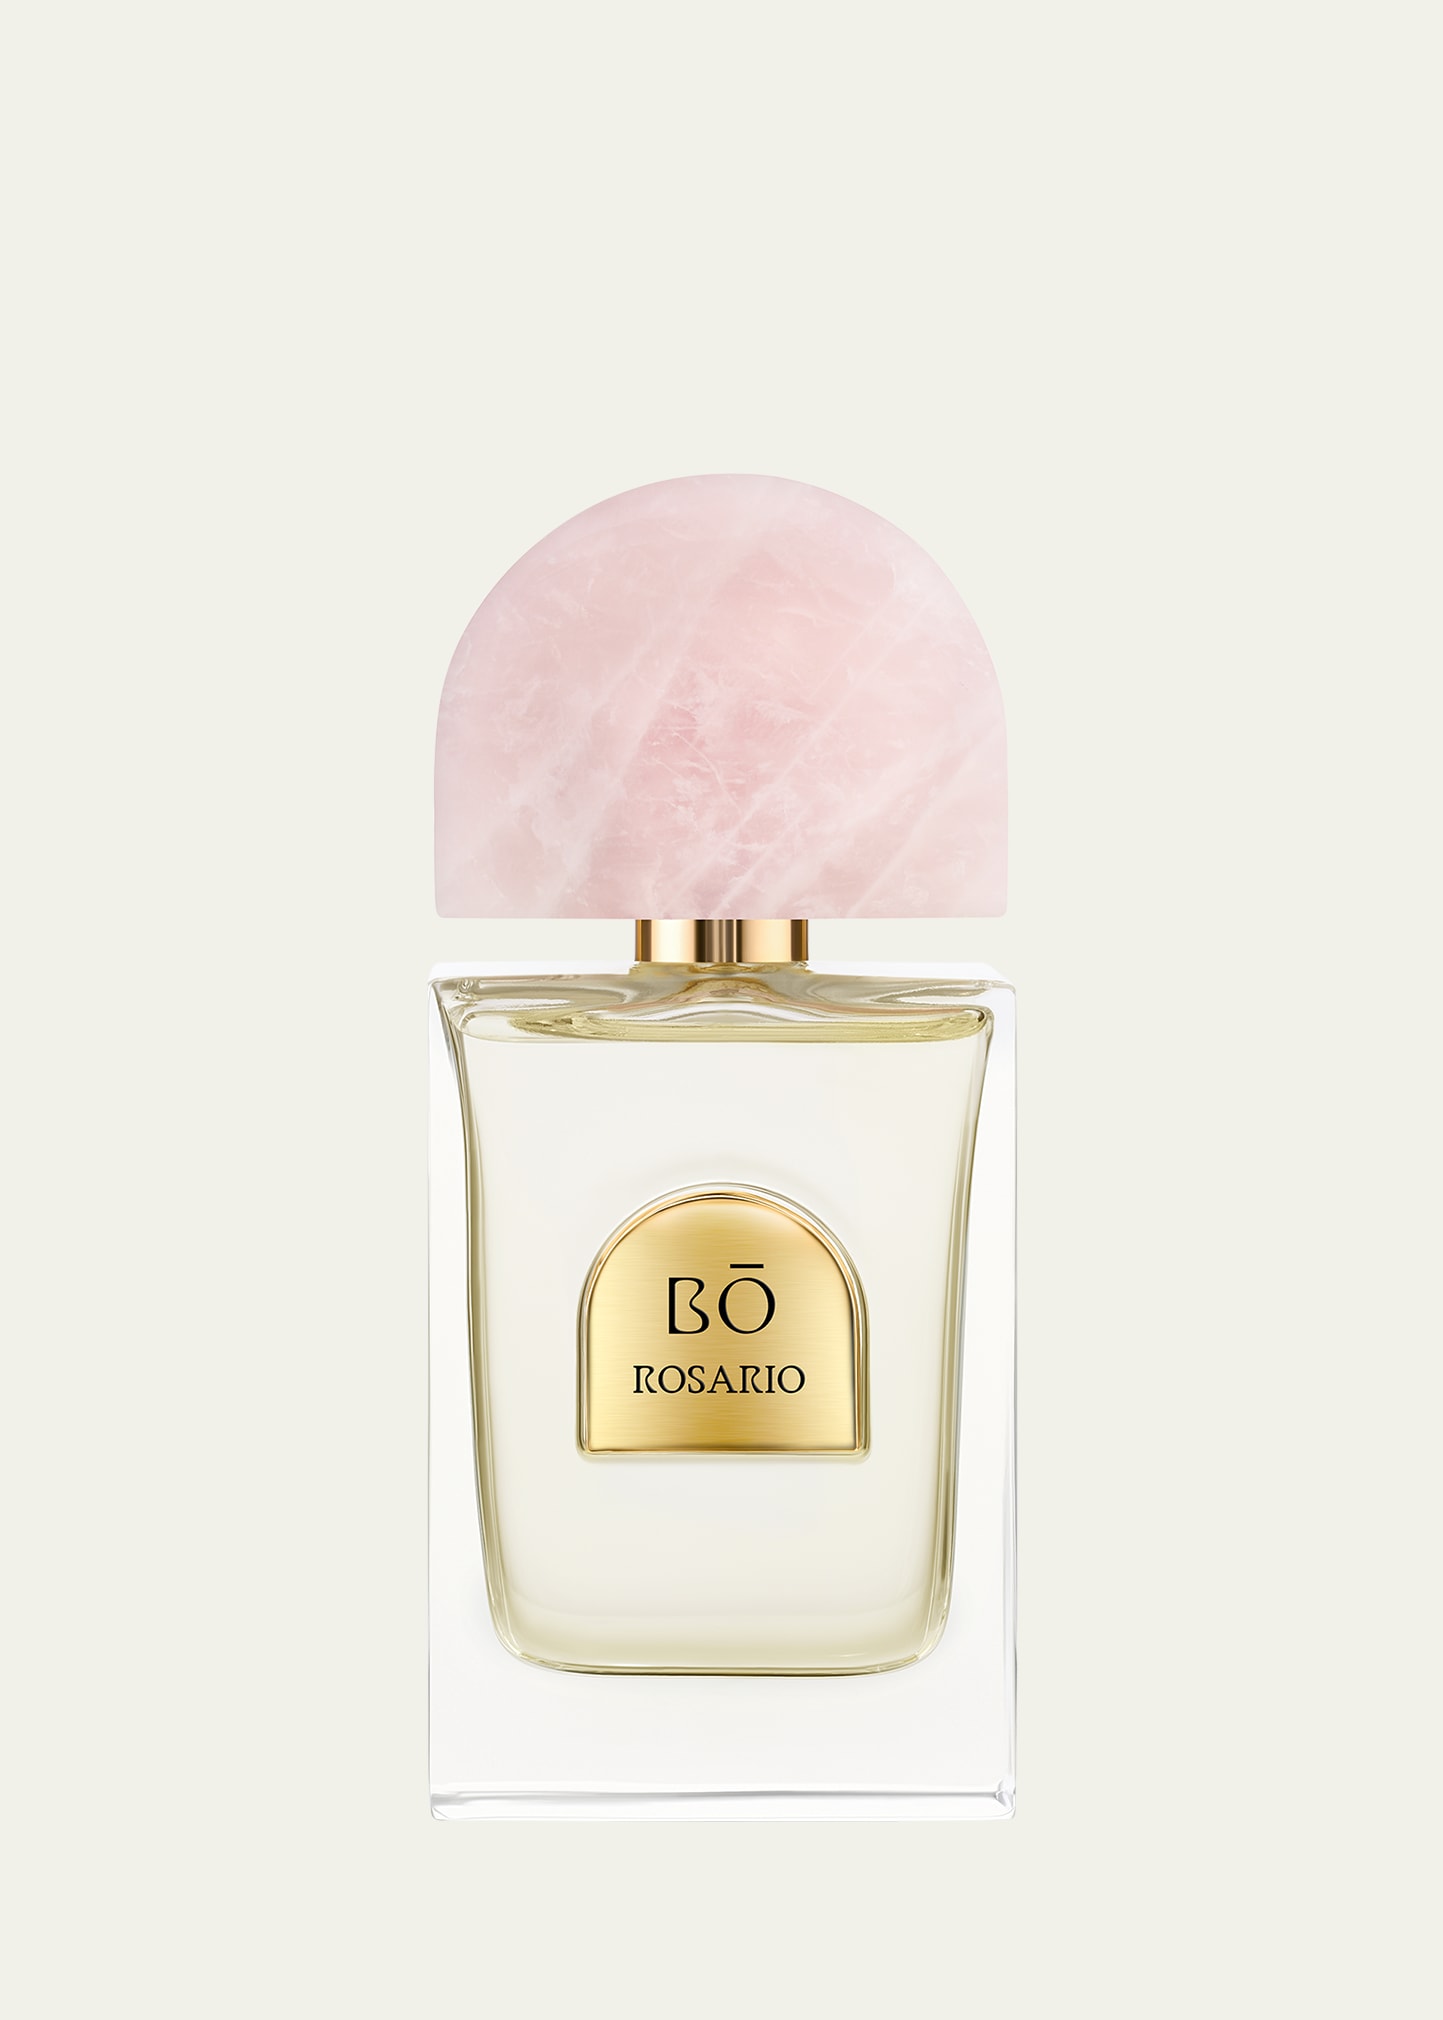 House of Bo Fragrances Rosario Parfum, 2.5 oz.